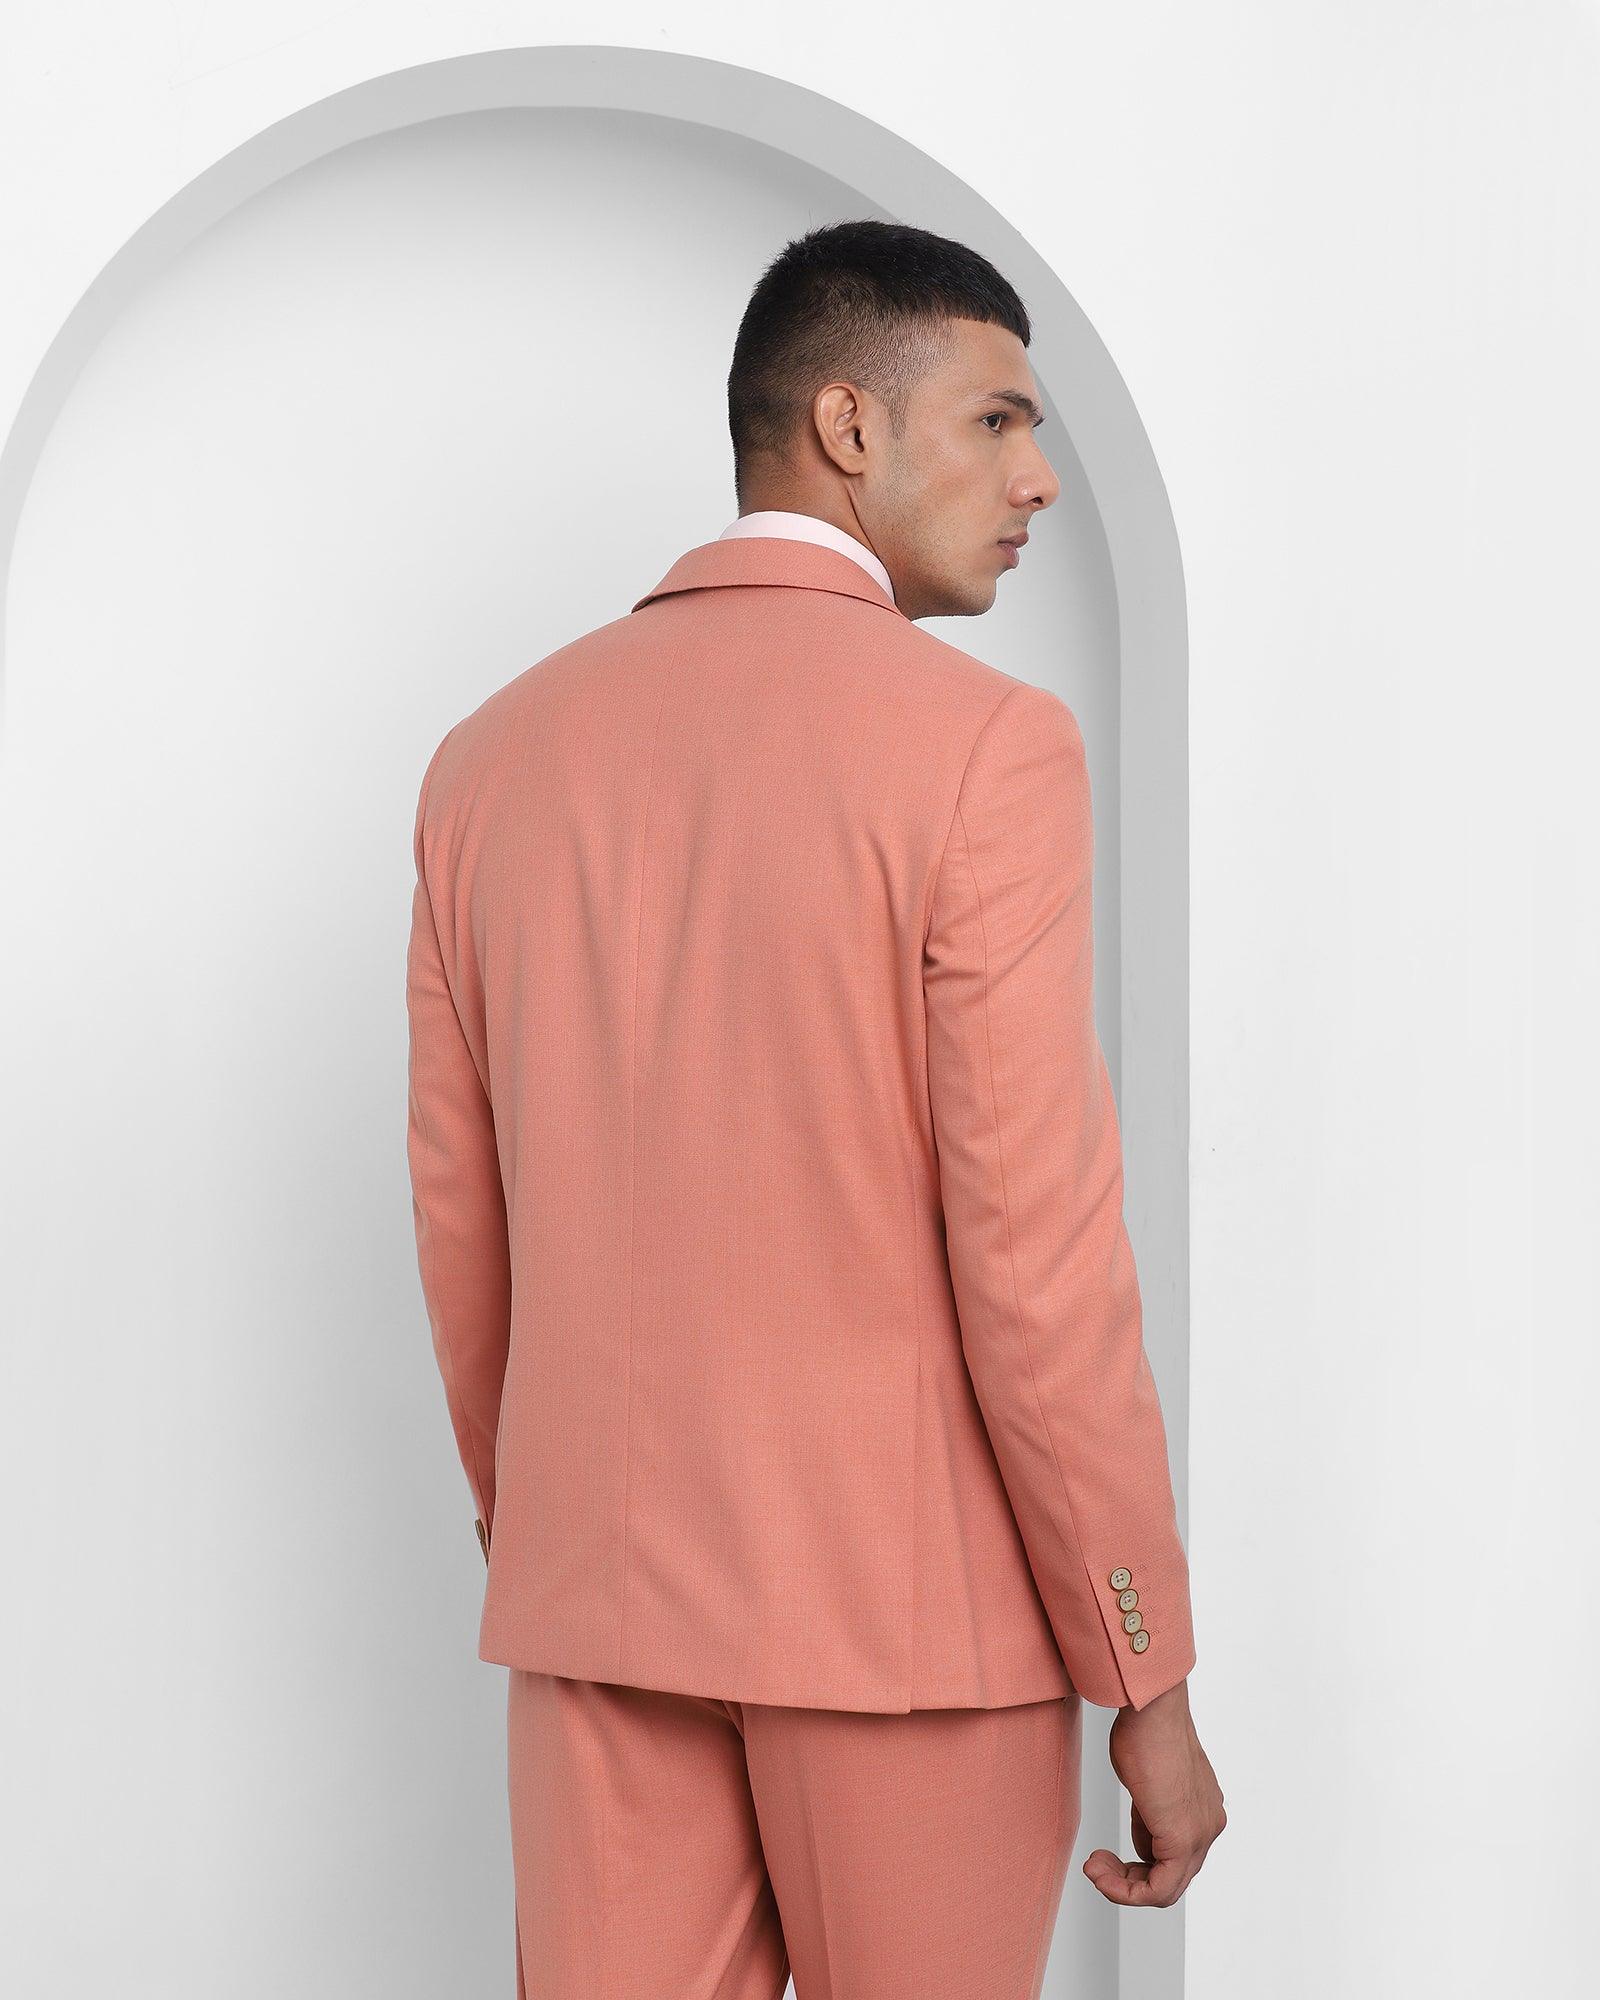 Three Piece Orange Solid Formal Suit - Tornell